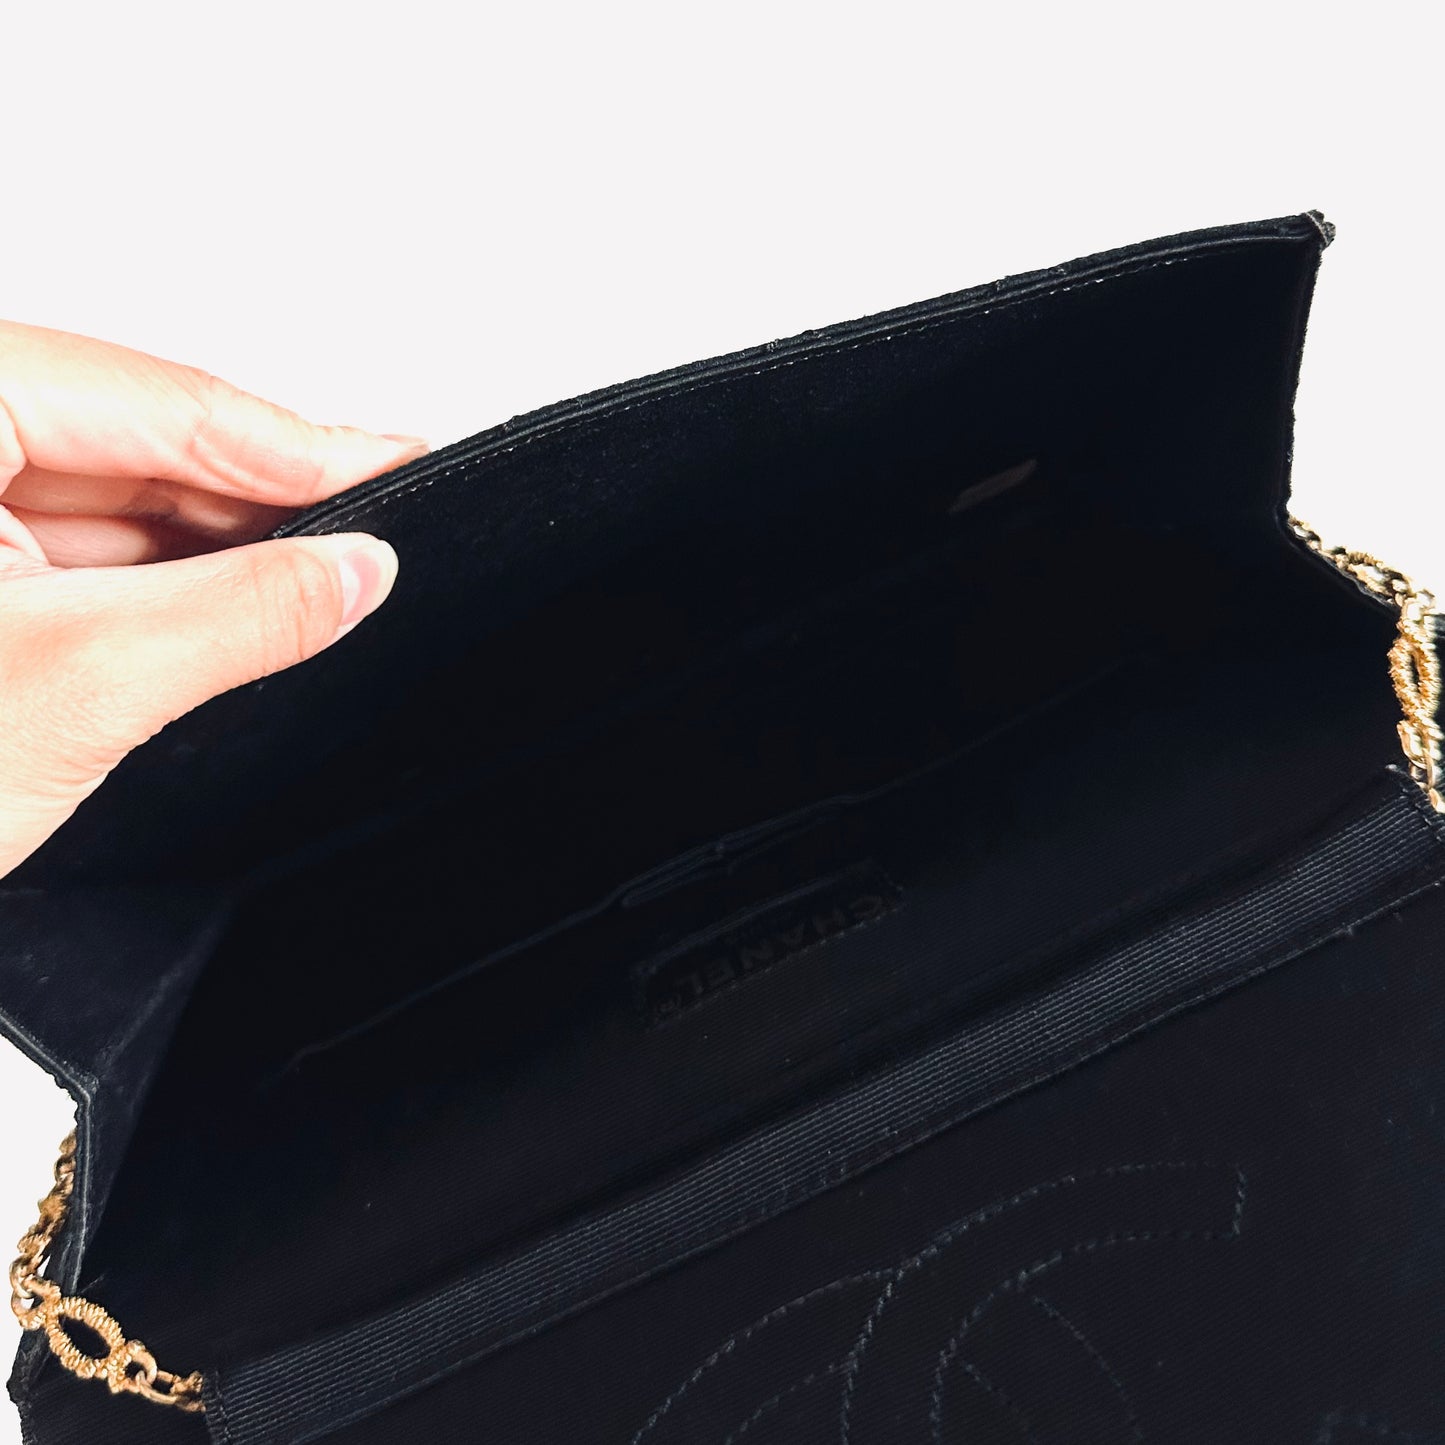 Chanel Black GHW Paris Limited CC Logo Turnlock Classic Quilted Satin Velvet Vintage Bijoux Chain Shoulder Sling Bag 1s